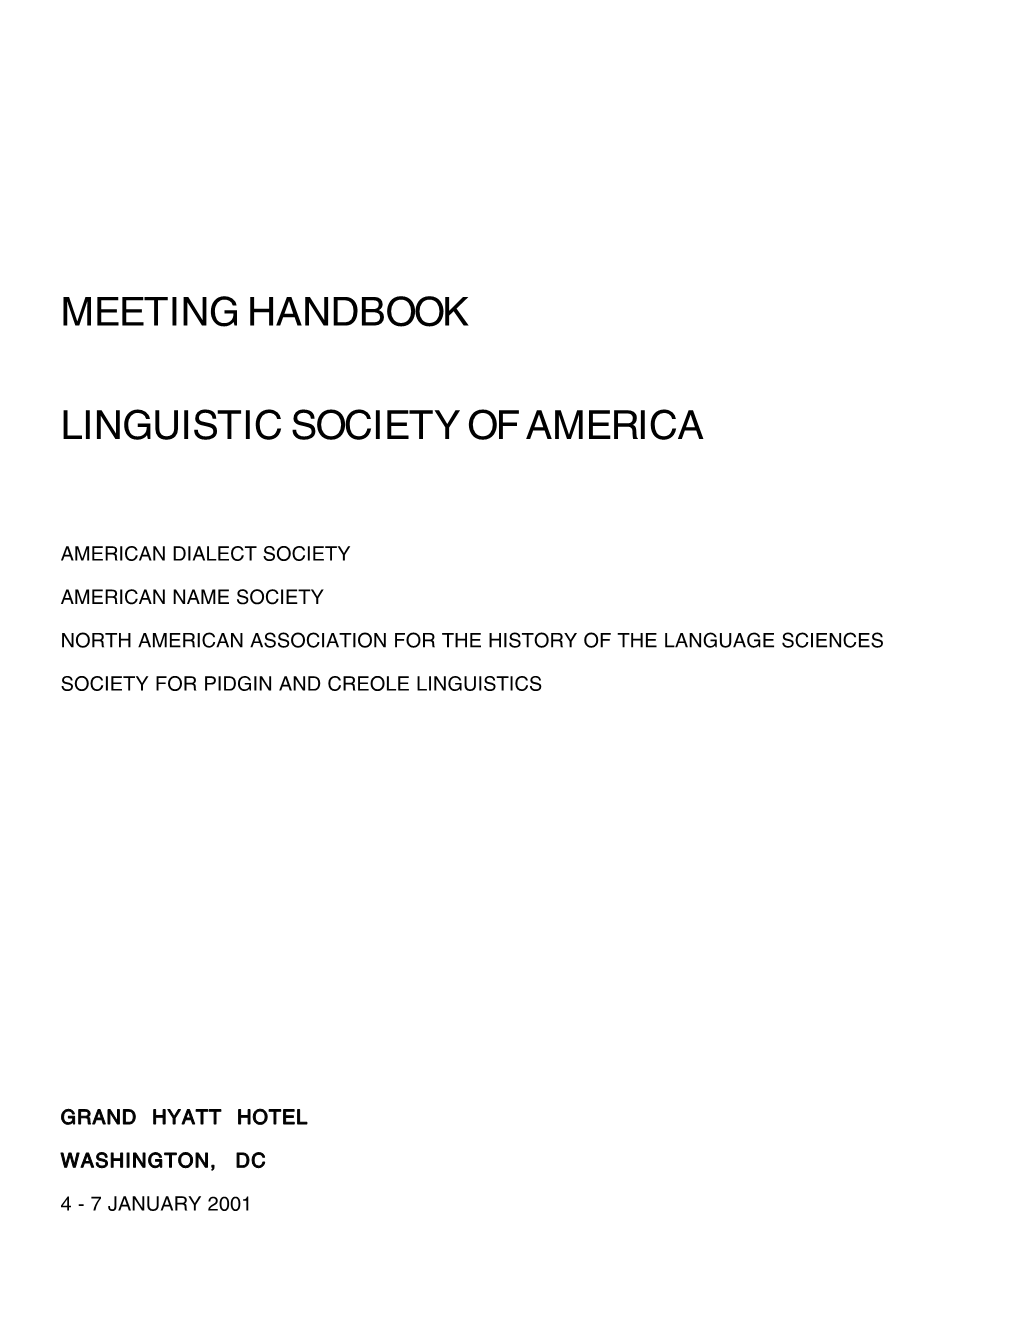 Annual Meeting Handbook